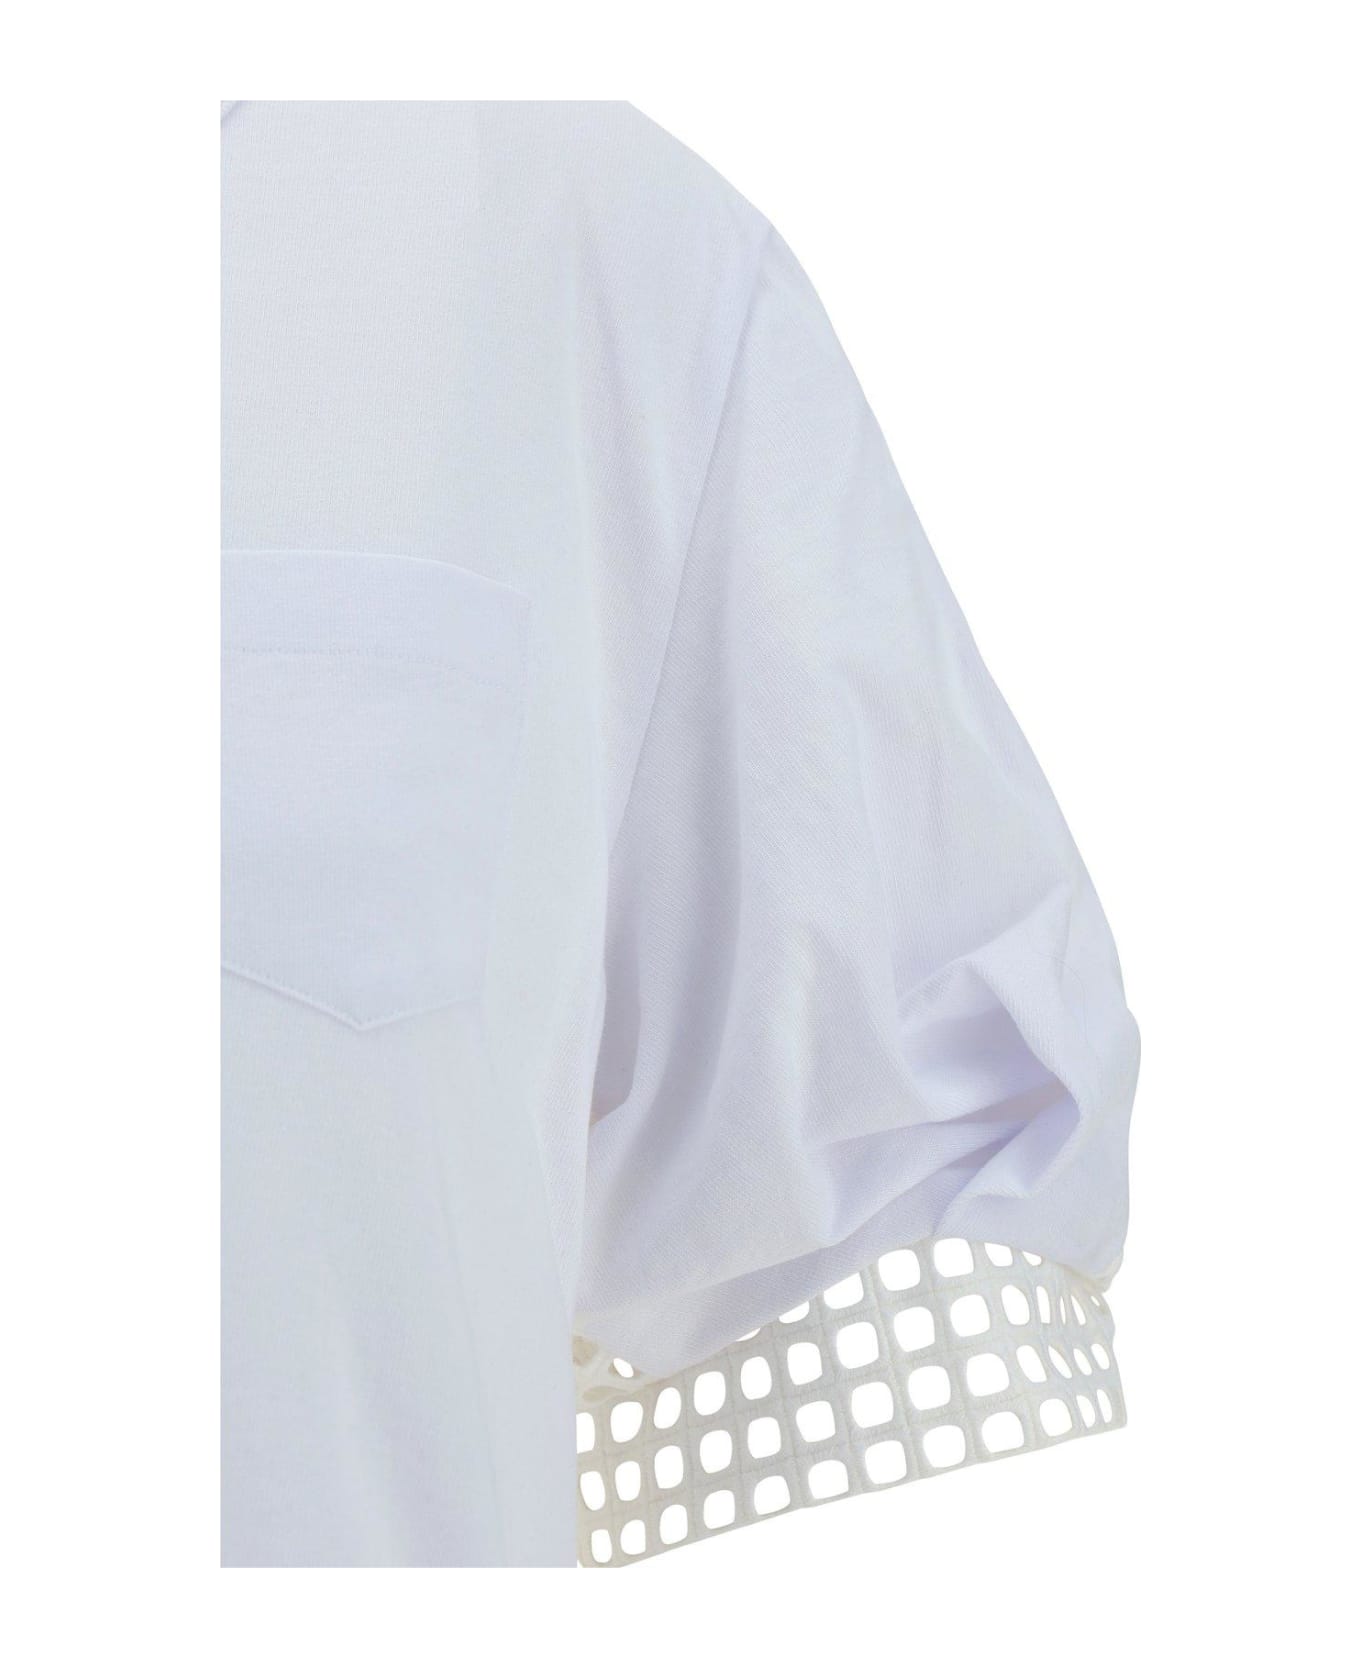 Sacai Saca Layered Crewneck T-shirt - WHITE